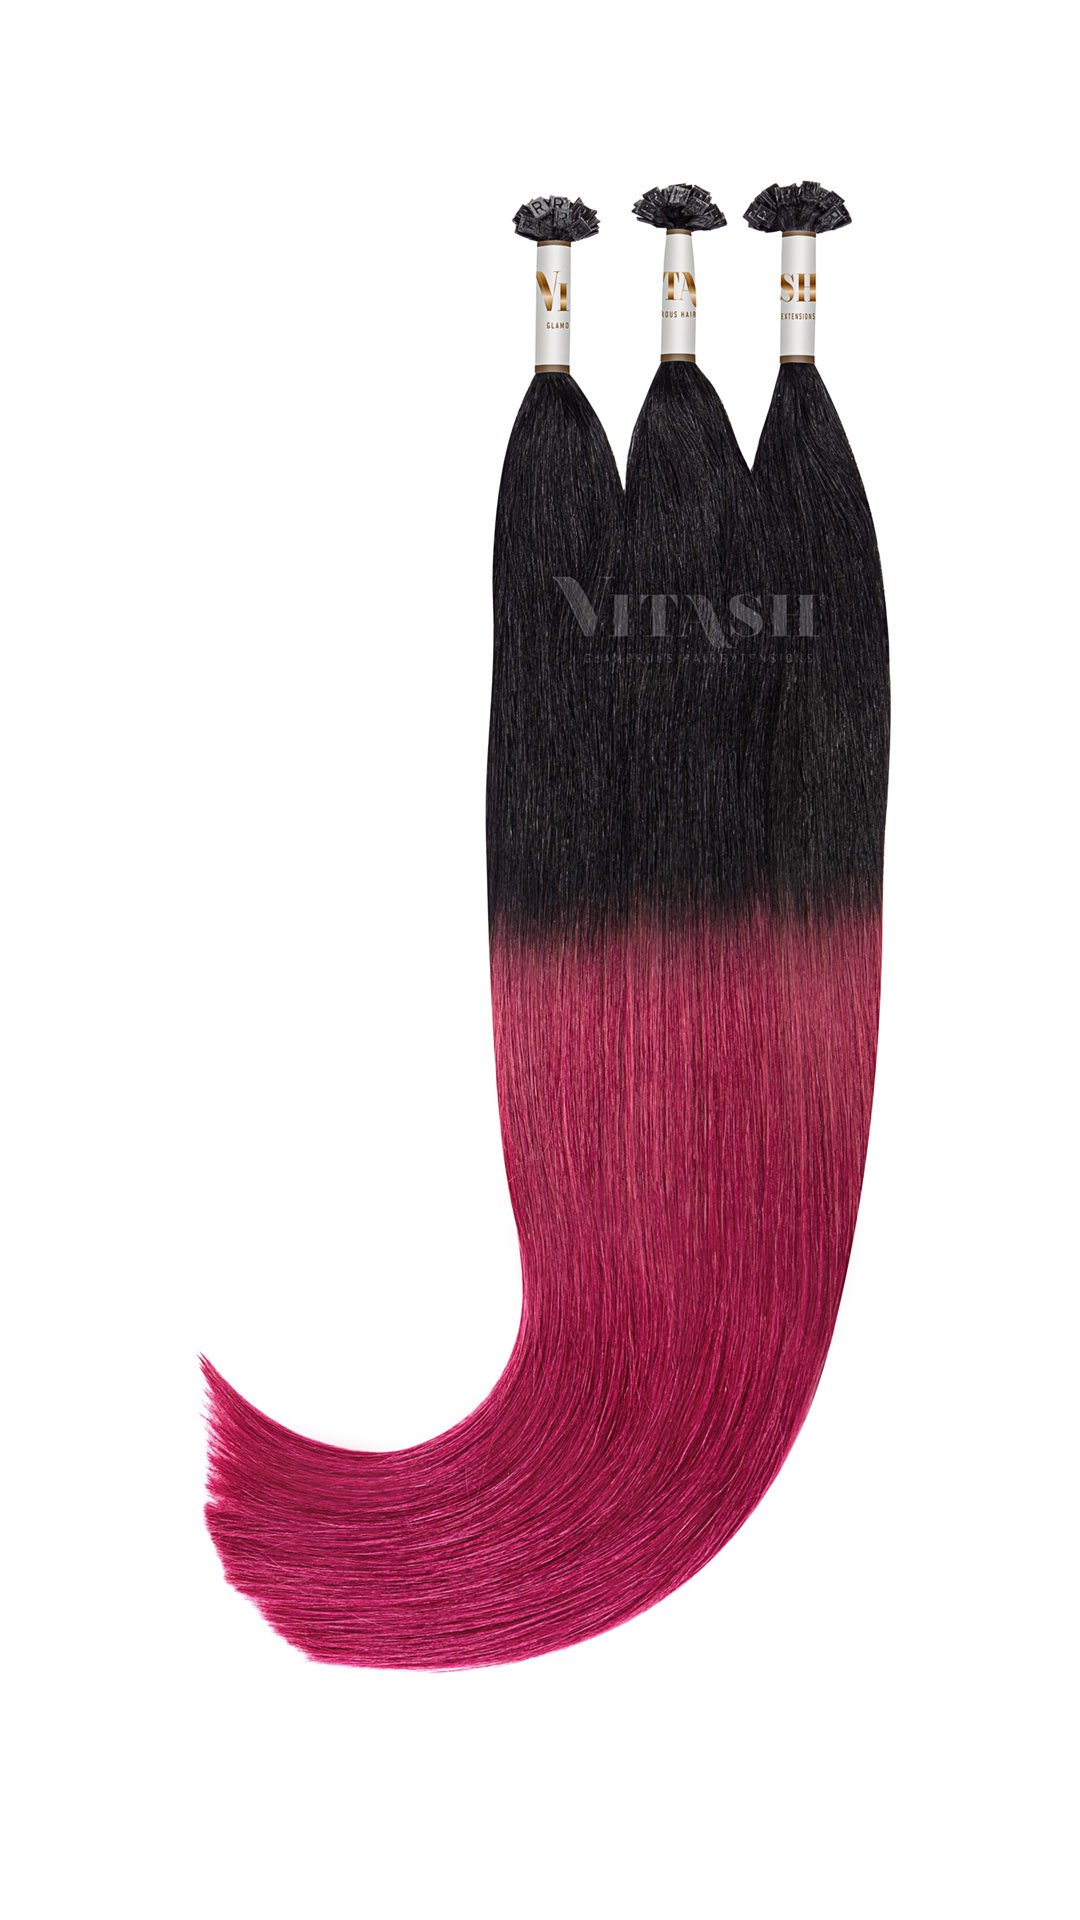 Vitash 25 Keratin Bonding strähnen | Haarverlaengerung | Extensions | Farbe #Ombre Schwarz-Burgundy | 55cm